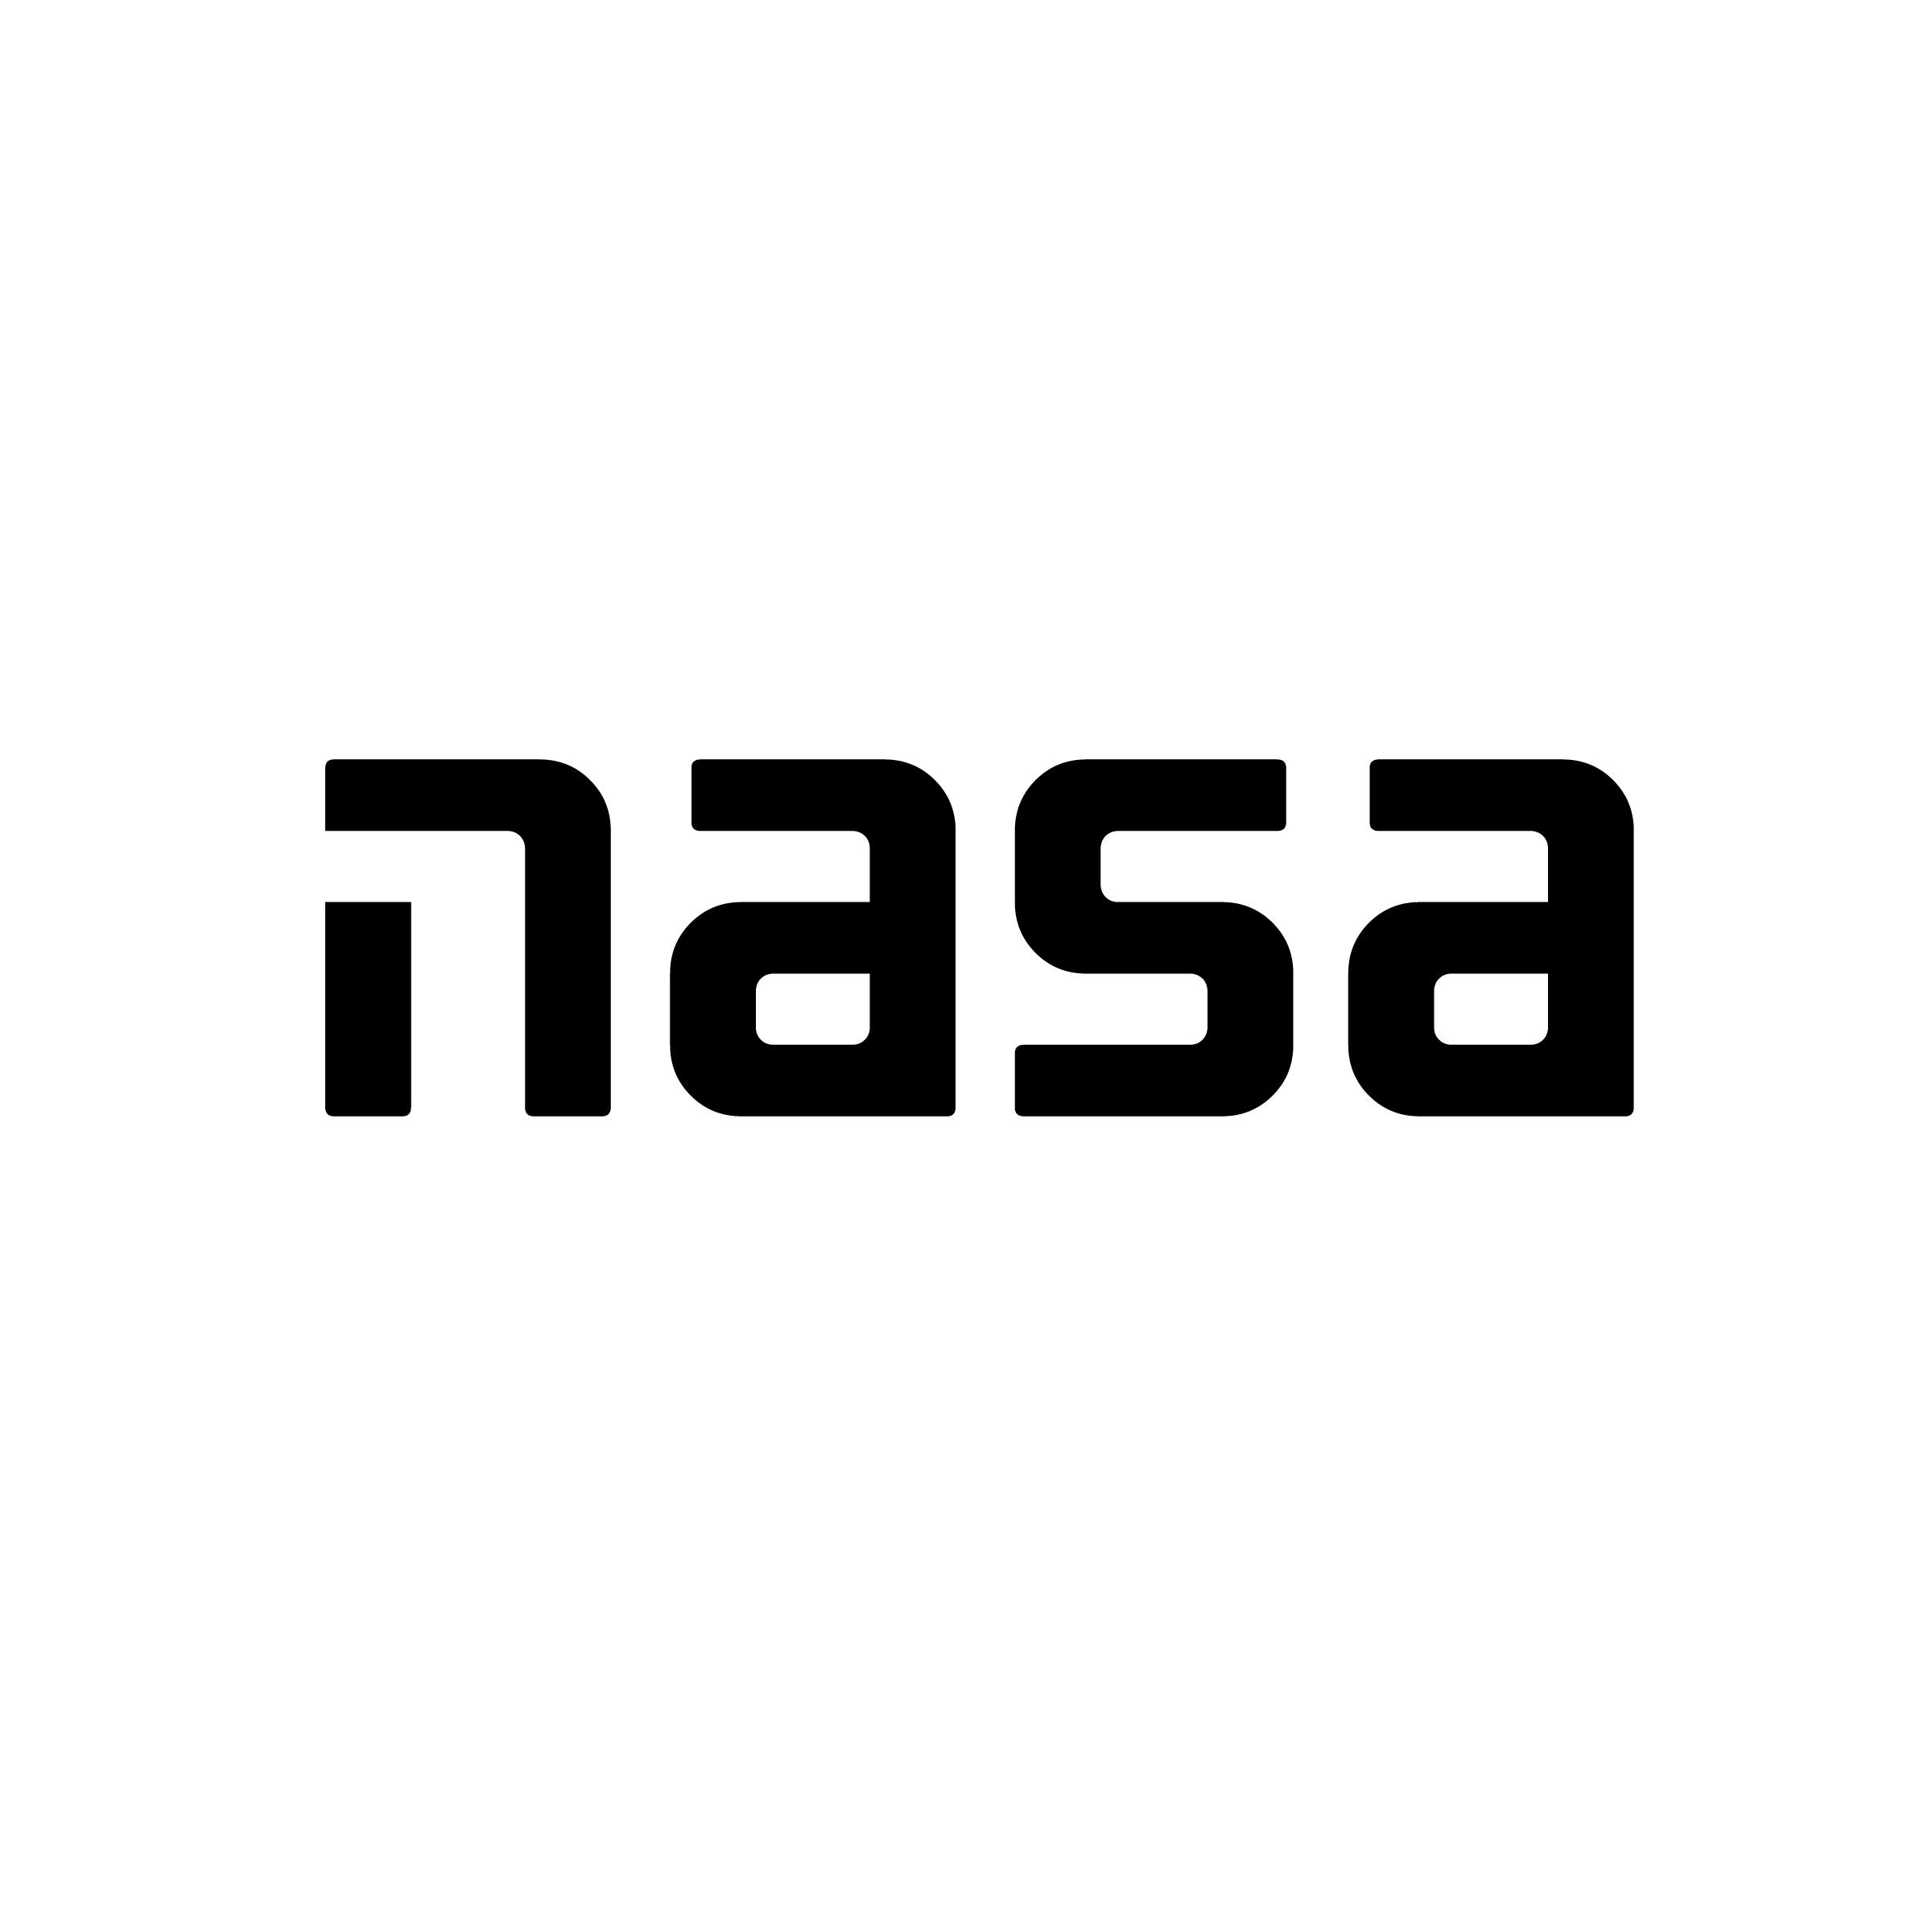 NASA logo redesign by Nick Myette 